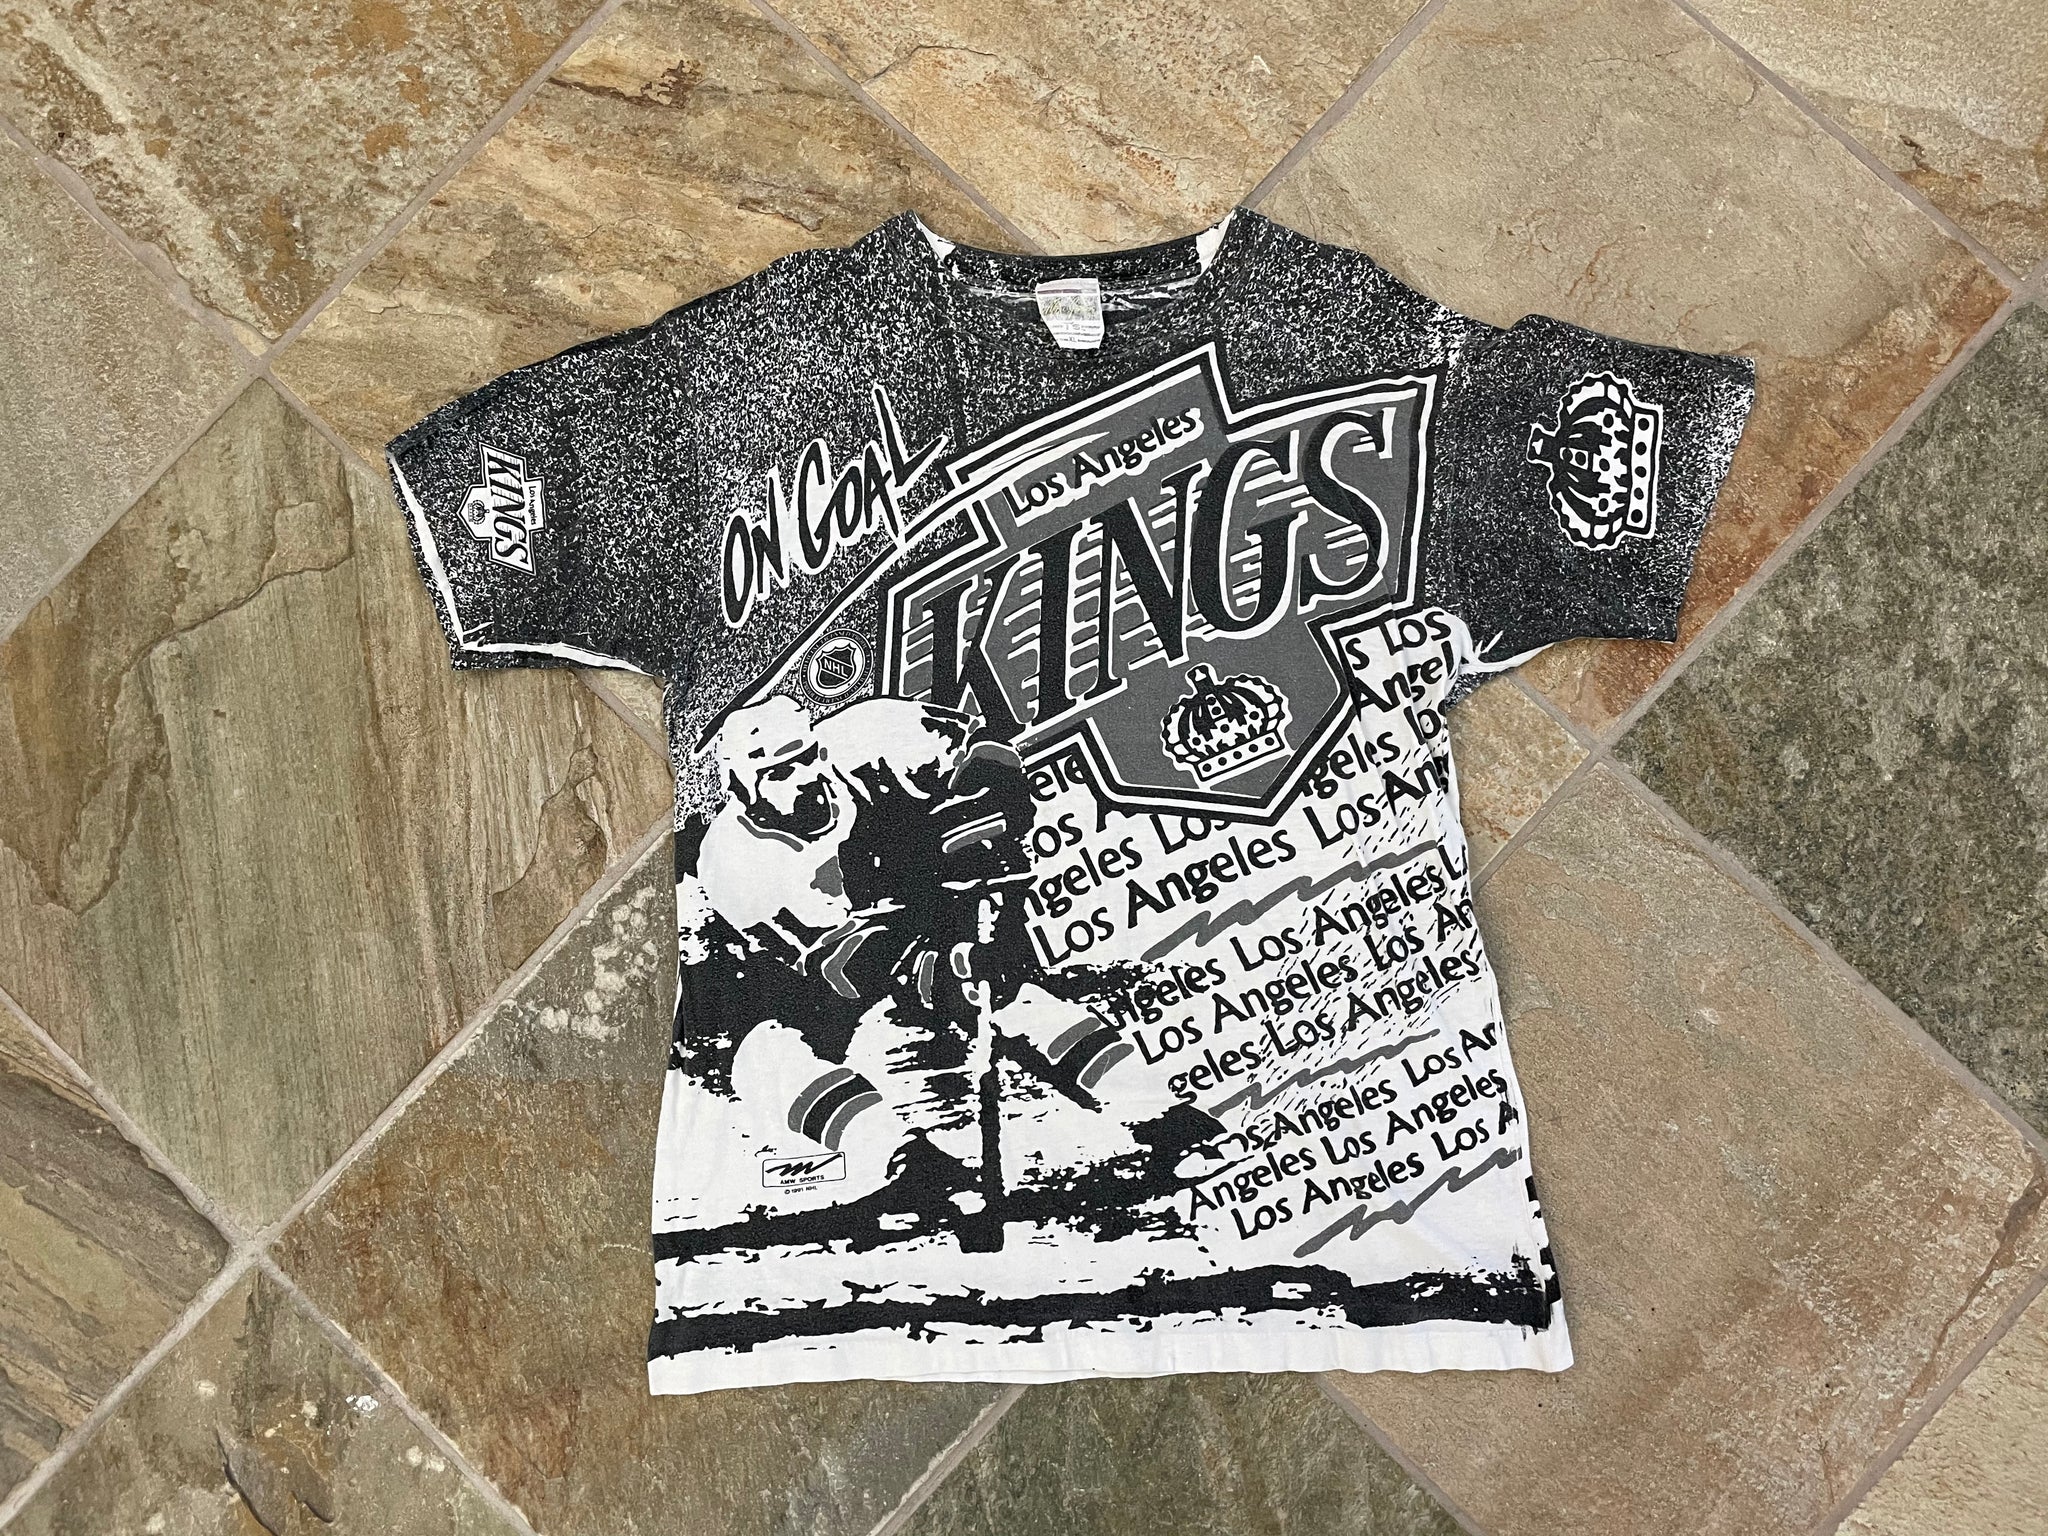 Vintage Los Angeles Kings Logo T-Shirt